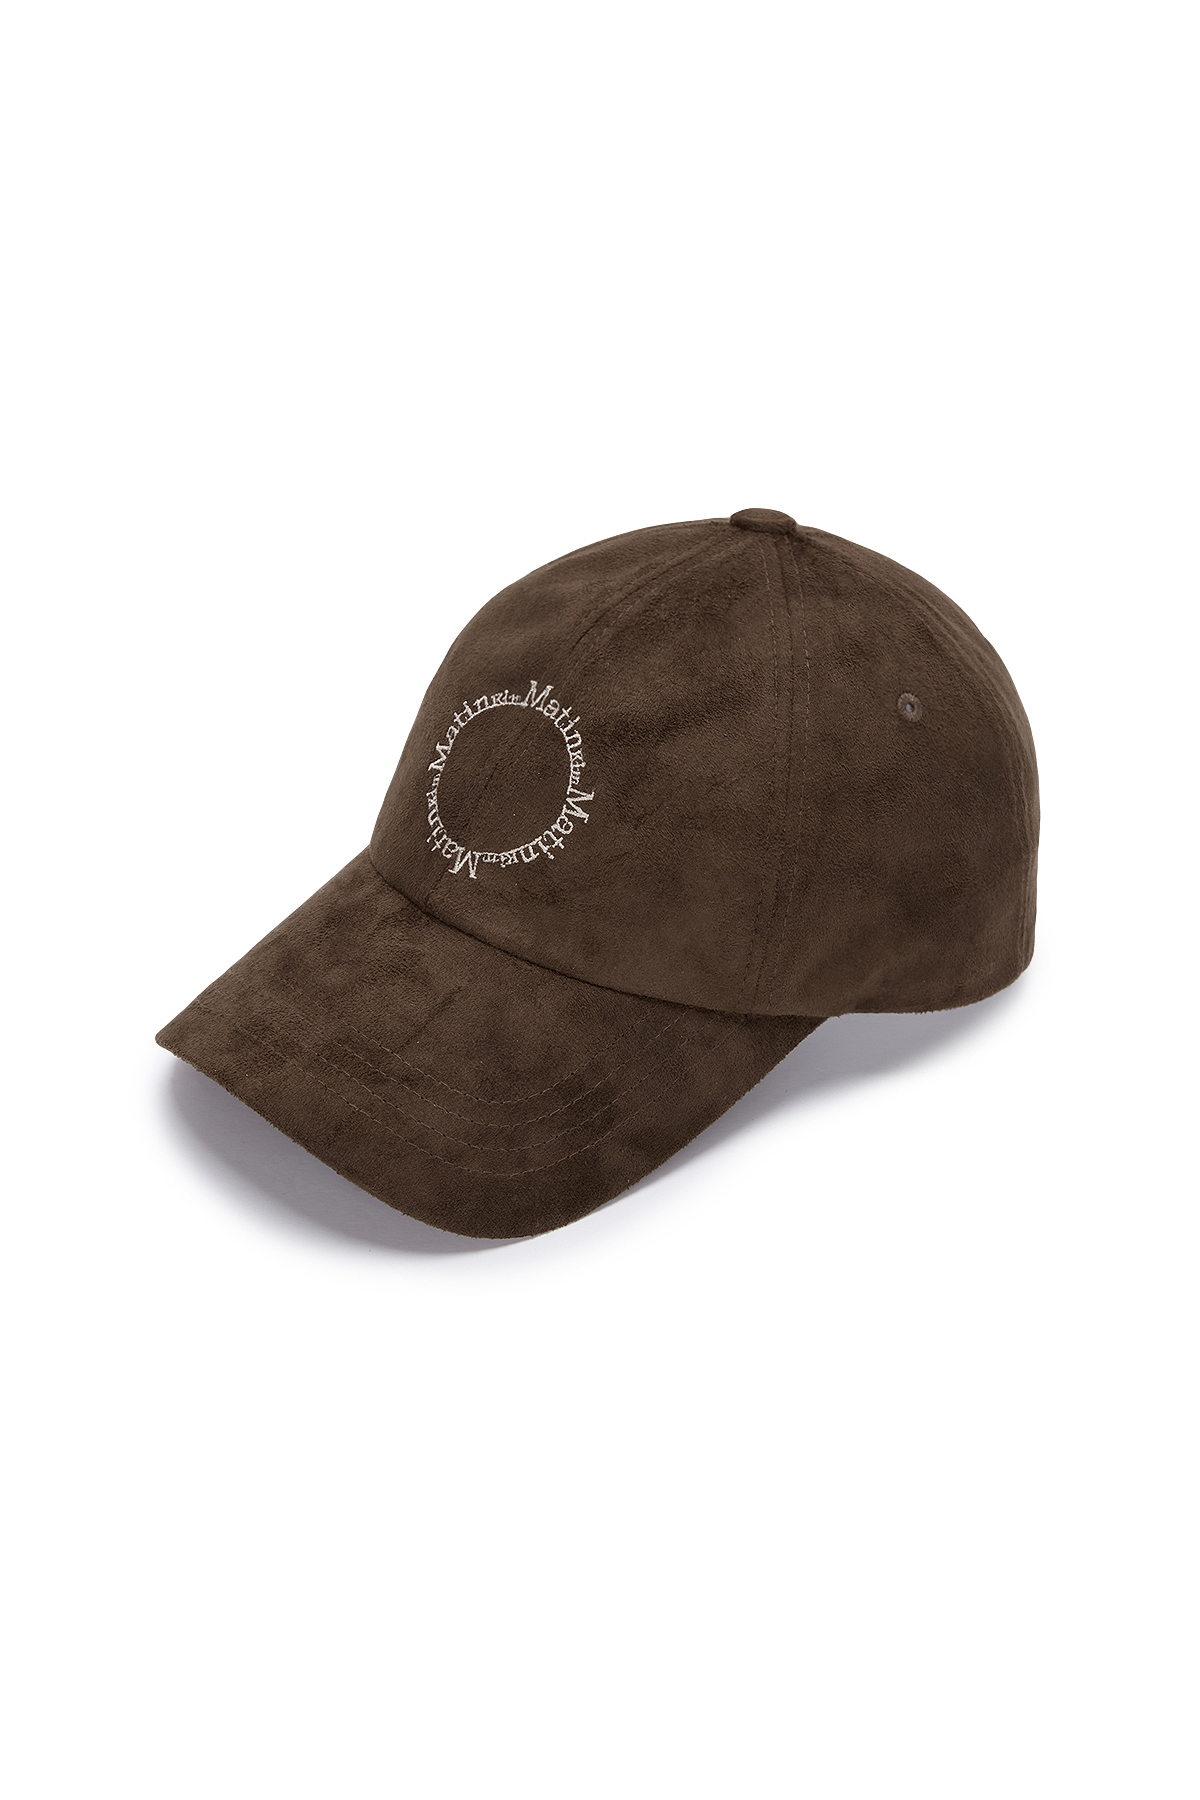 CIRCLE LOGO SUEDE BALL CAP IN BROWN